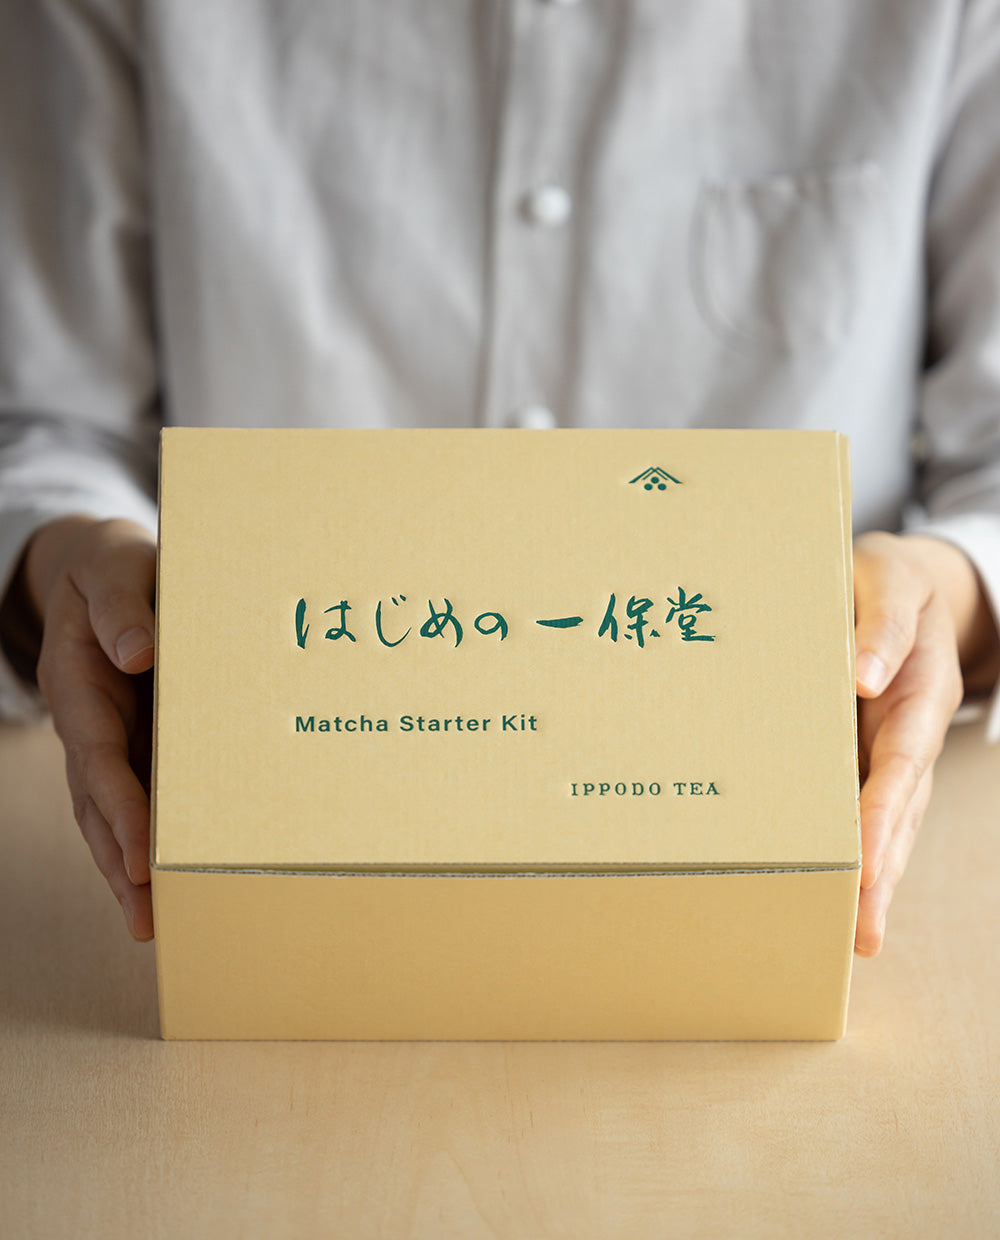 Products:  New Hajime-no-Ippodo Matcha Starter Kit goes on sale October 1, 2023